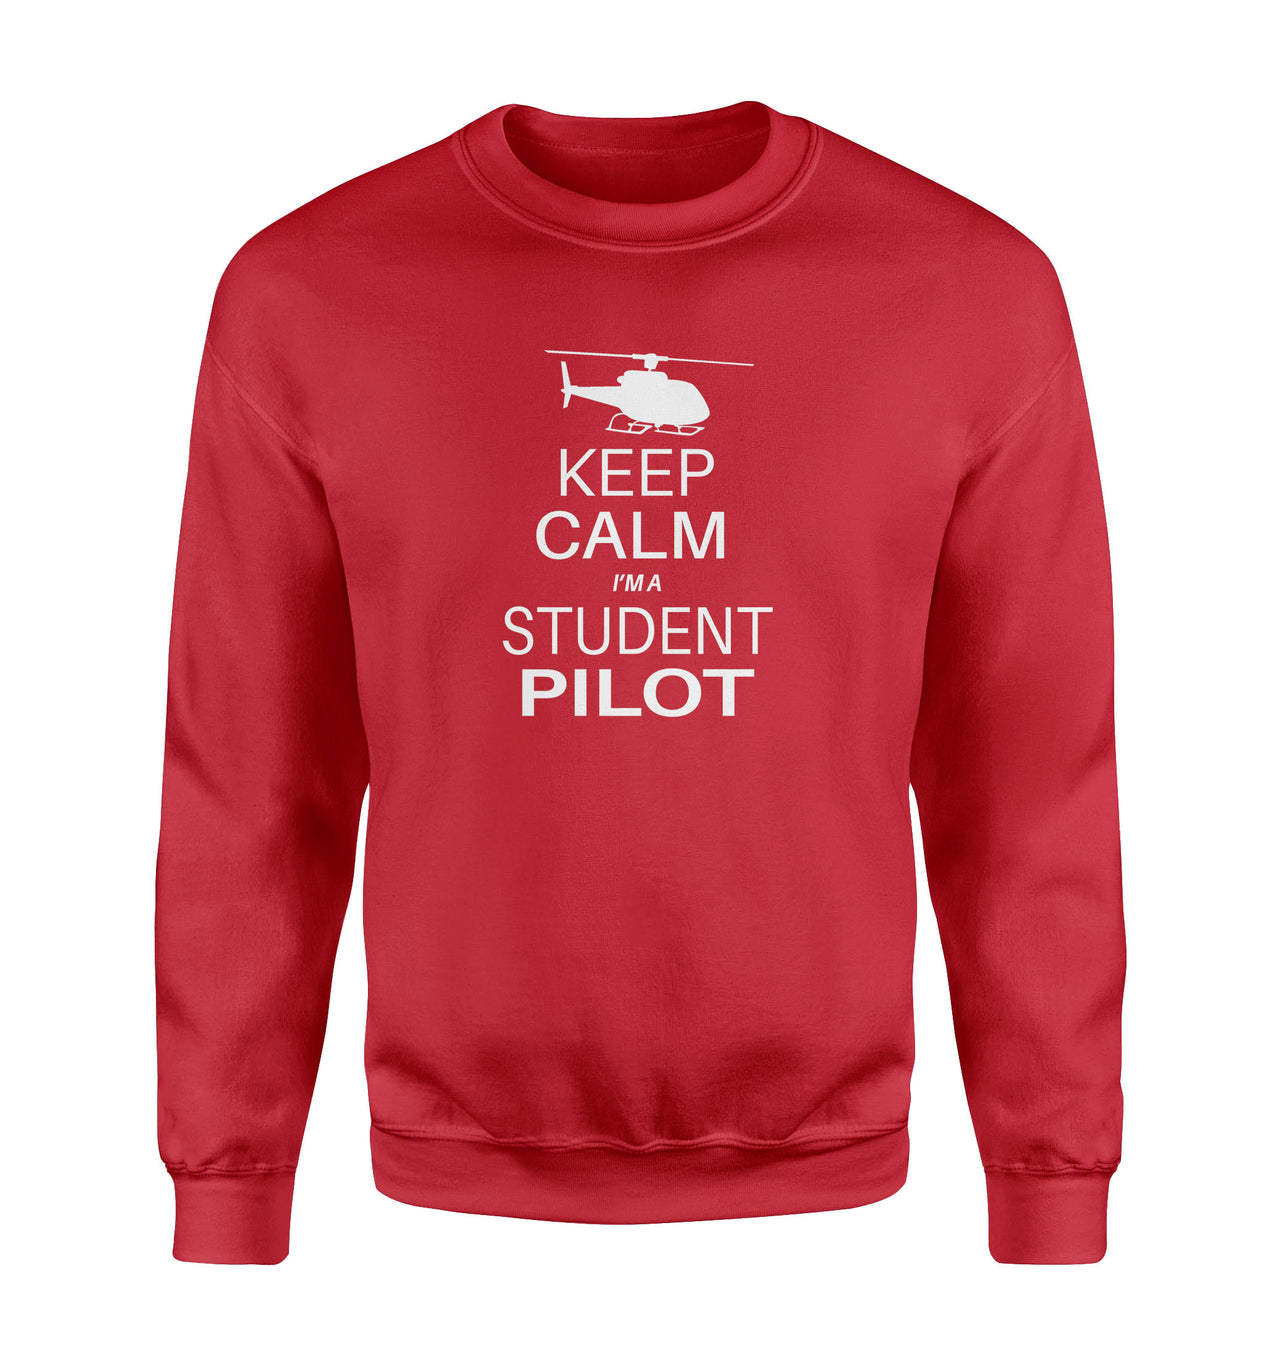 Student Pilot (Helicopter) Designed Sweatshirts